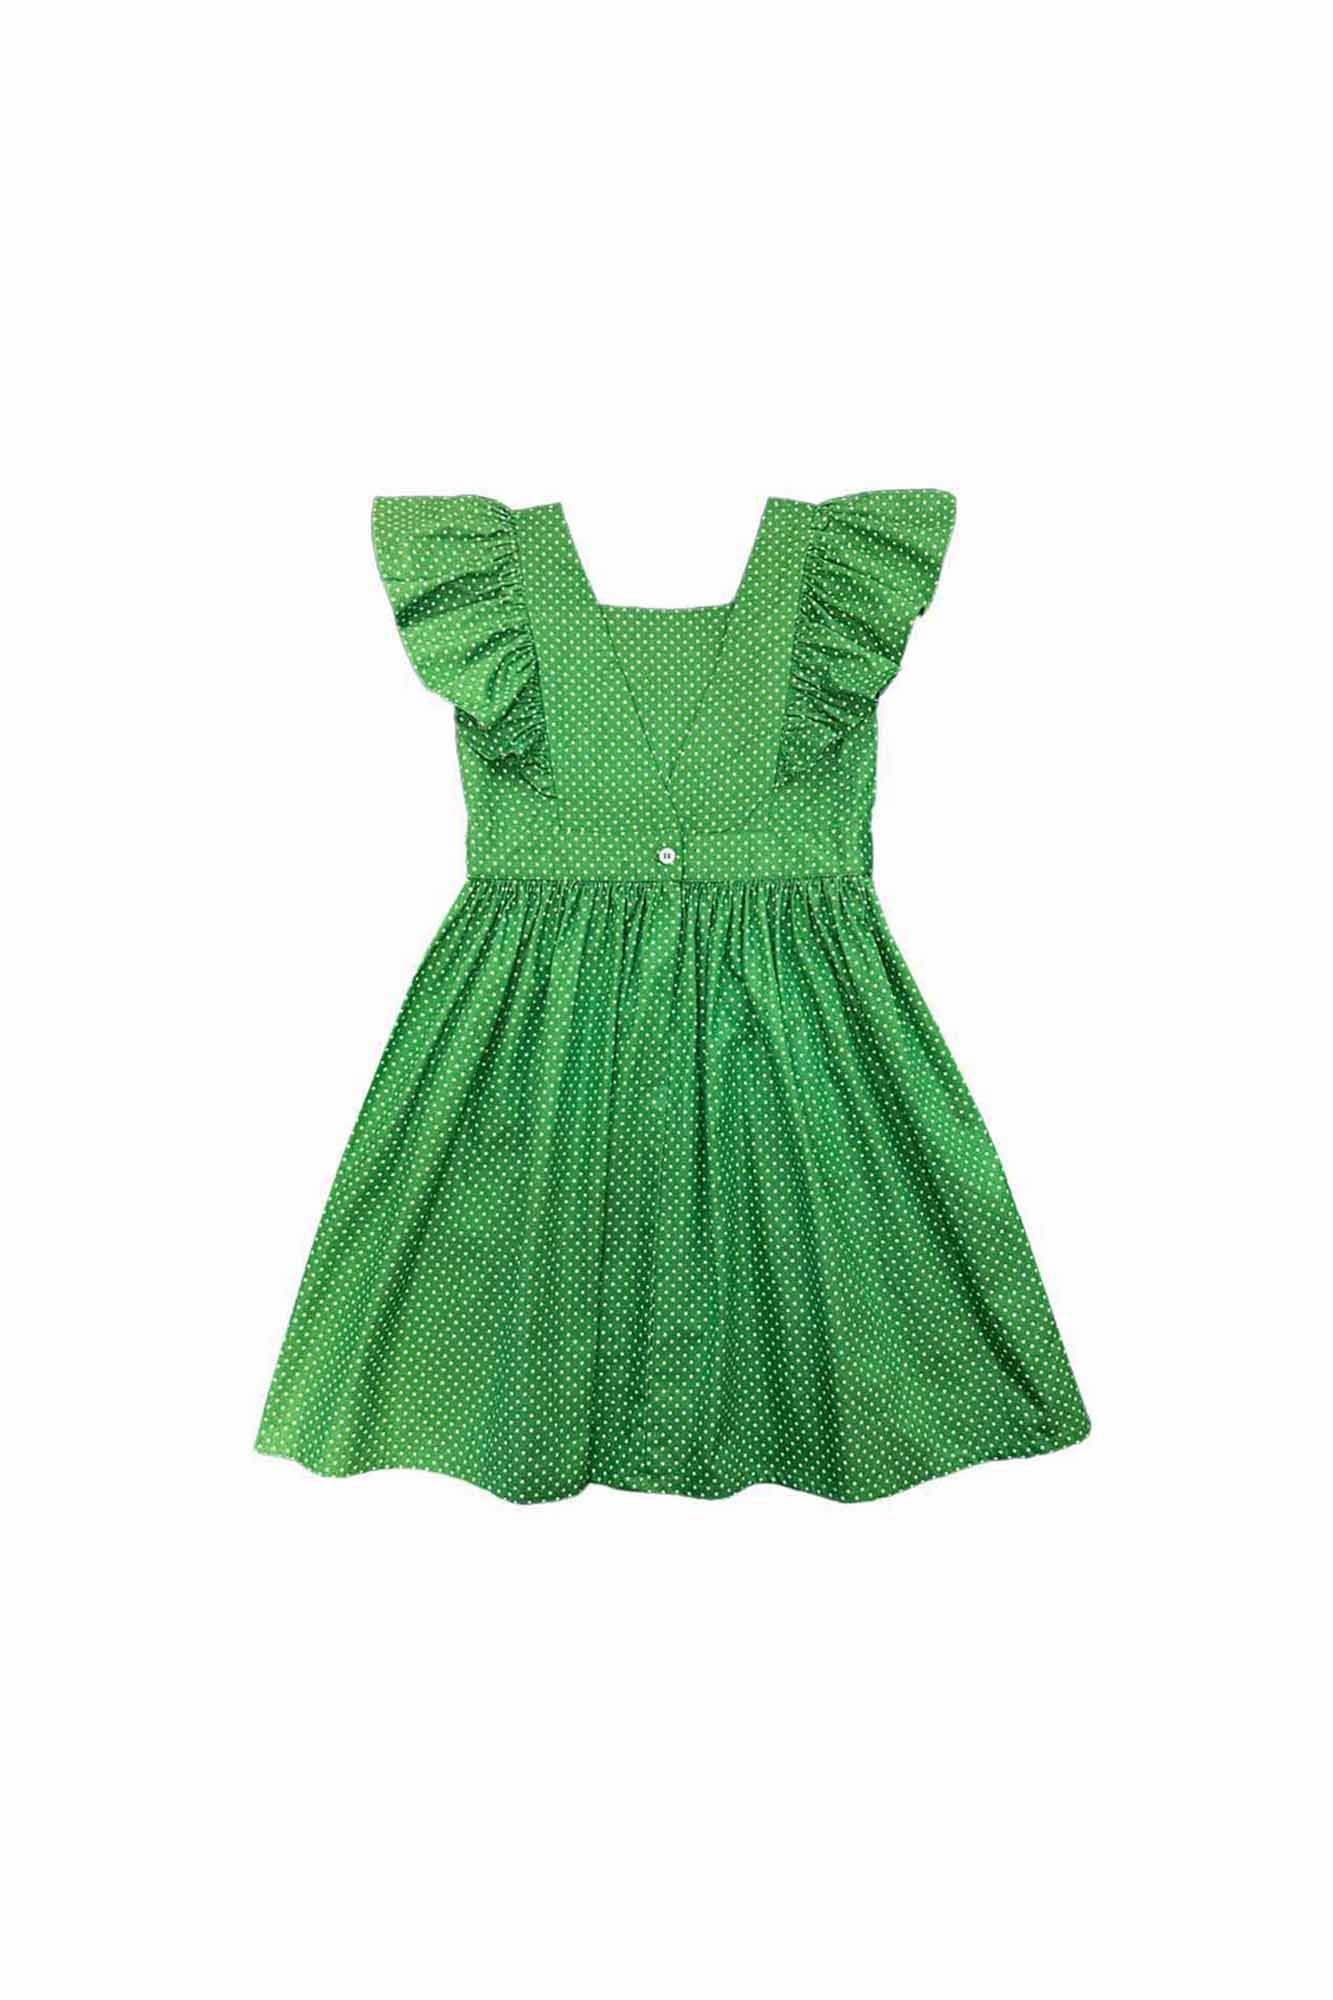 Green Polka Dot Amanda Dress